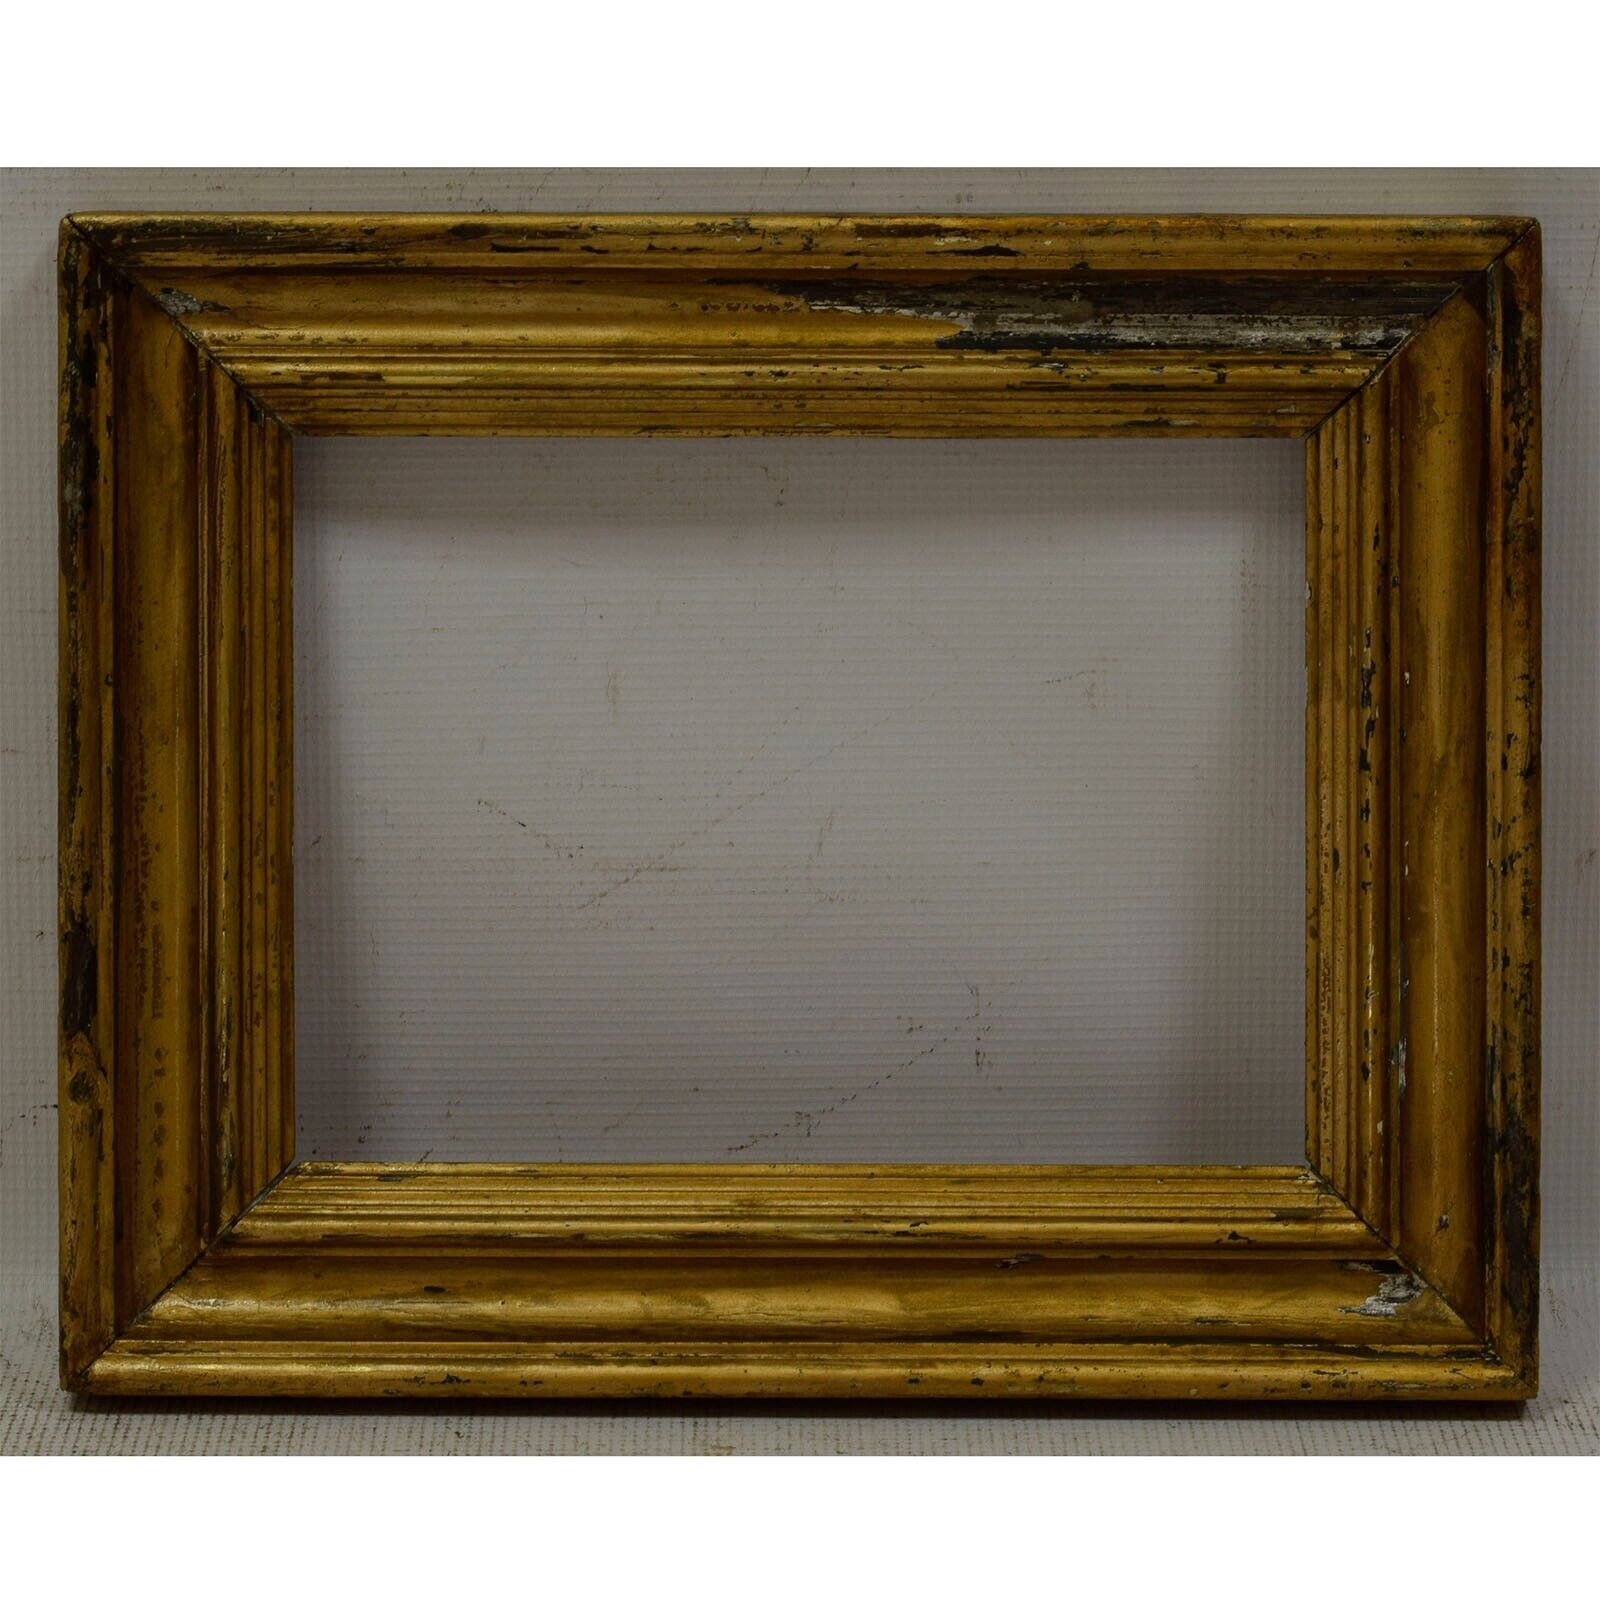 Ca. 1900 Old wooden frame Berliner Leiste? original condition Internal: 10 x 7.5